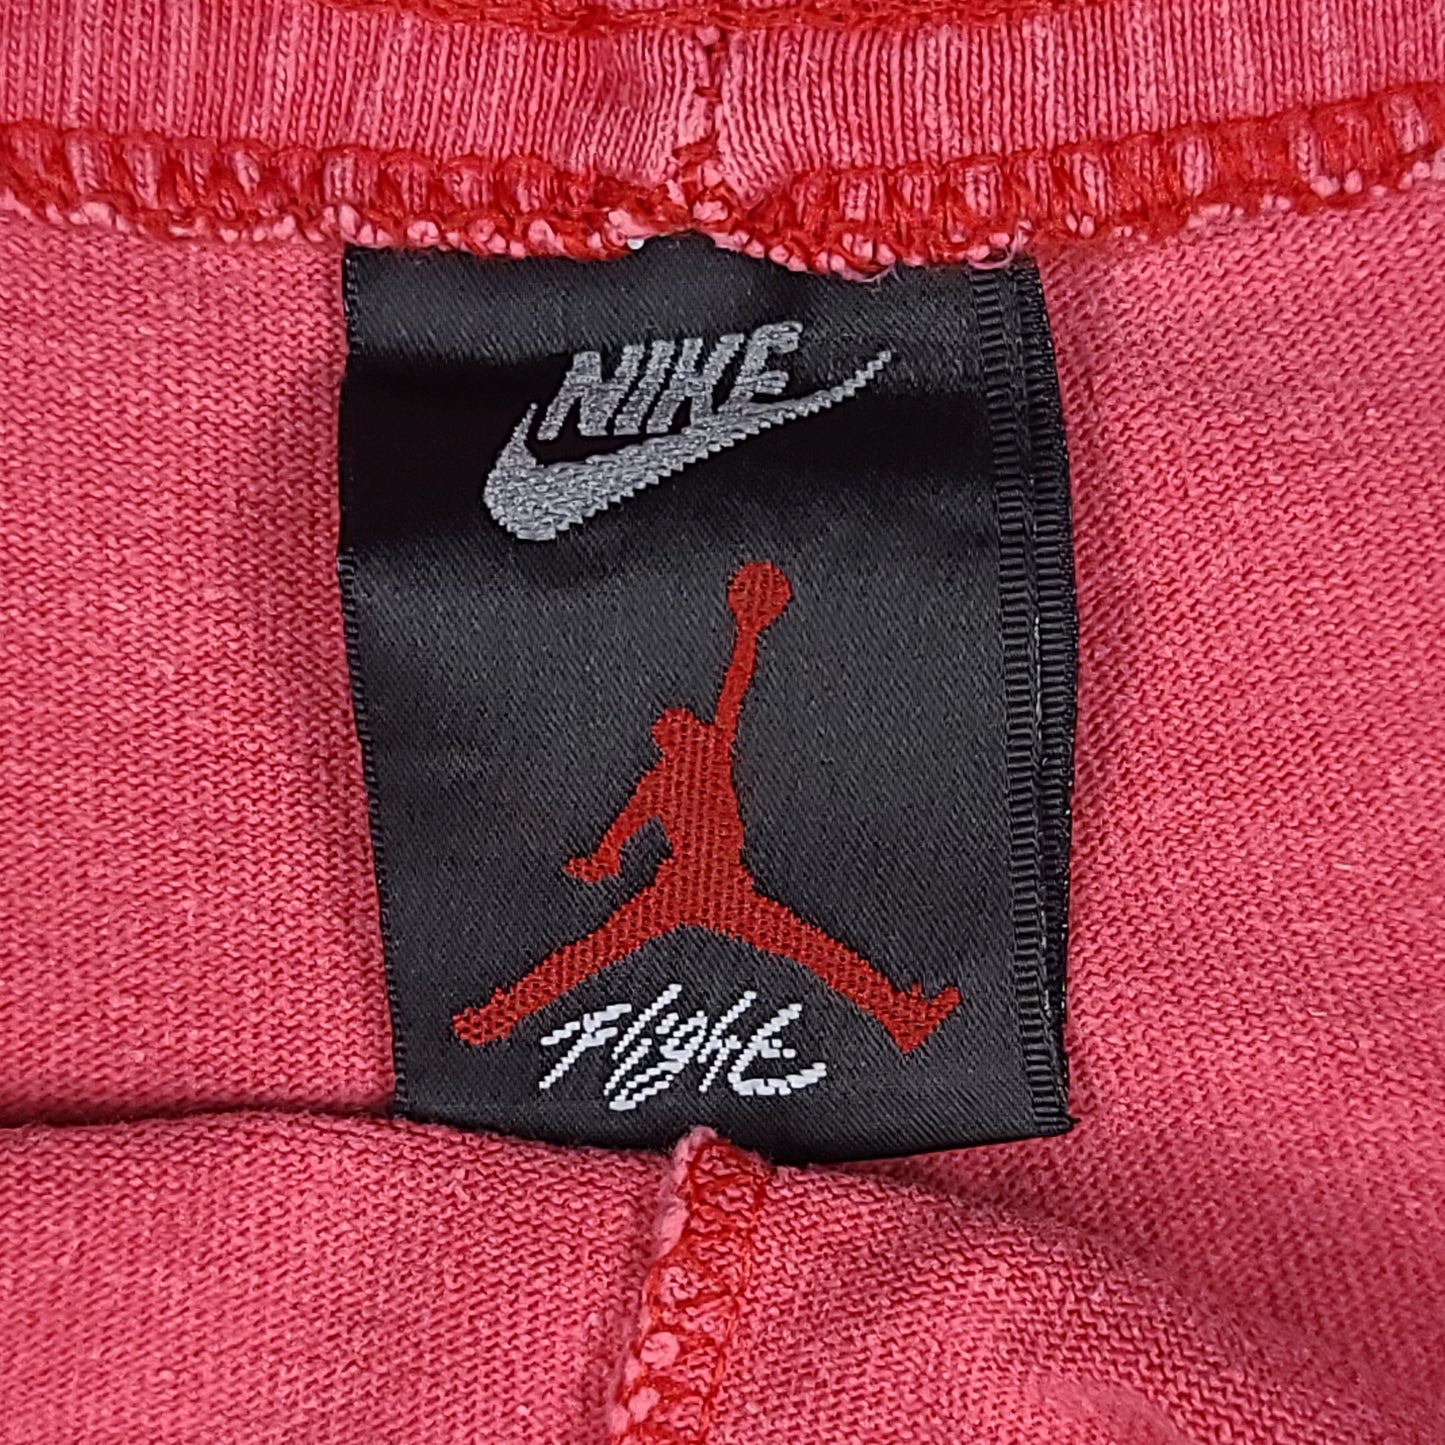 Vintage 90's Nike Air Jordan Flight Red Cotton Shorts